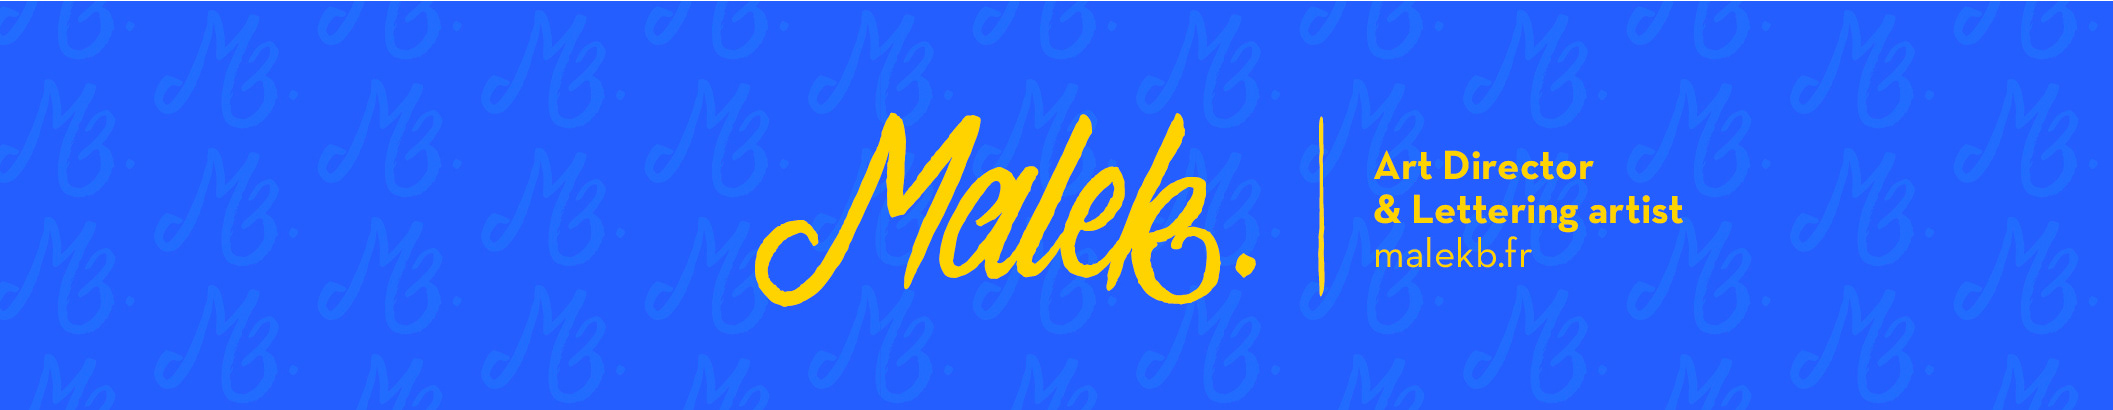 Profielbanner van Malek B.